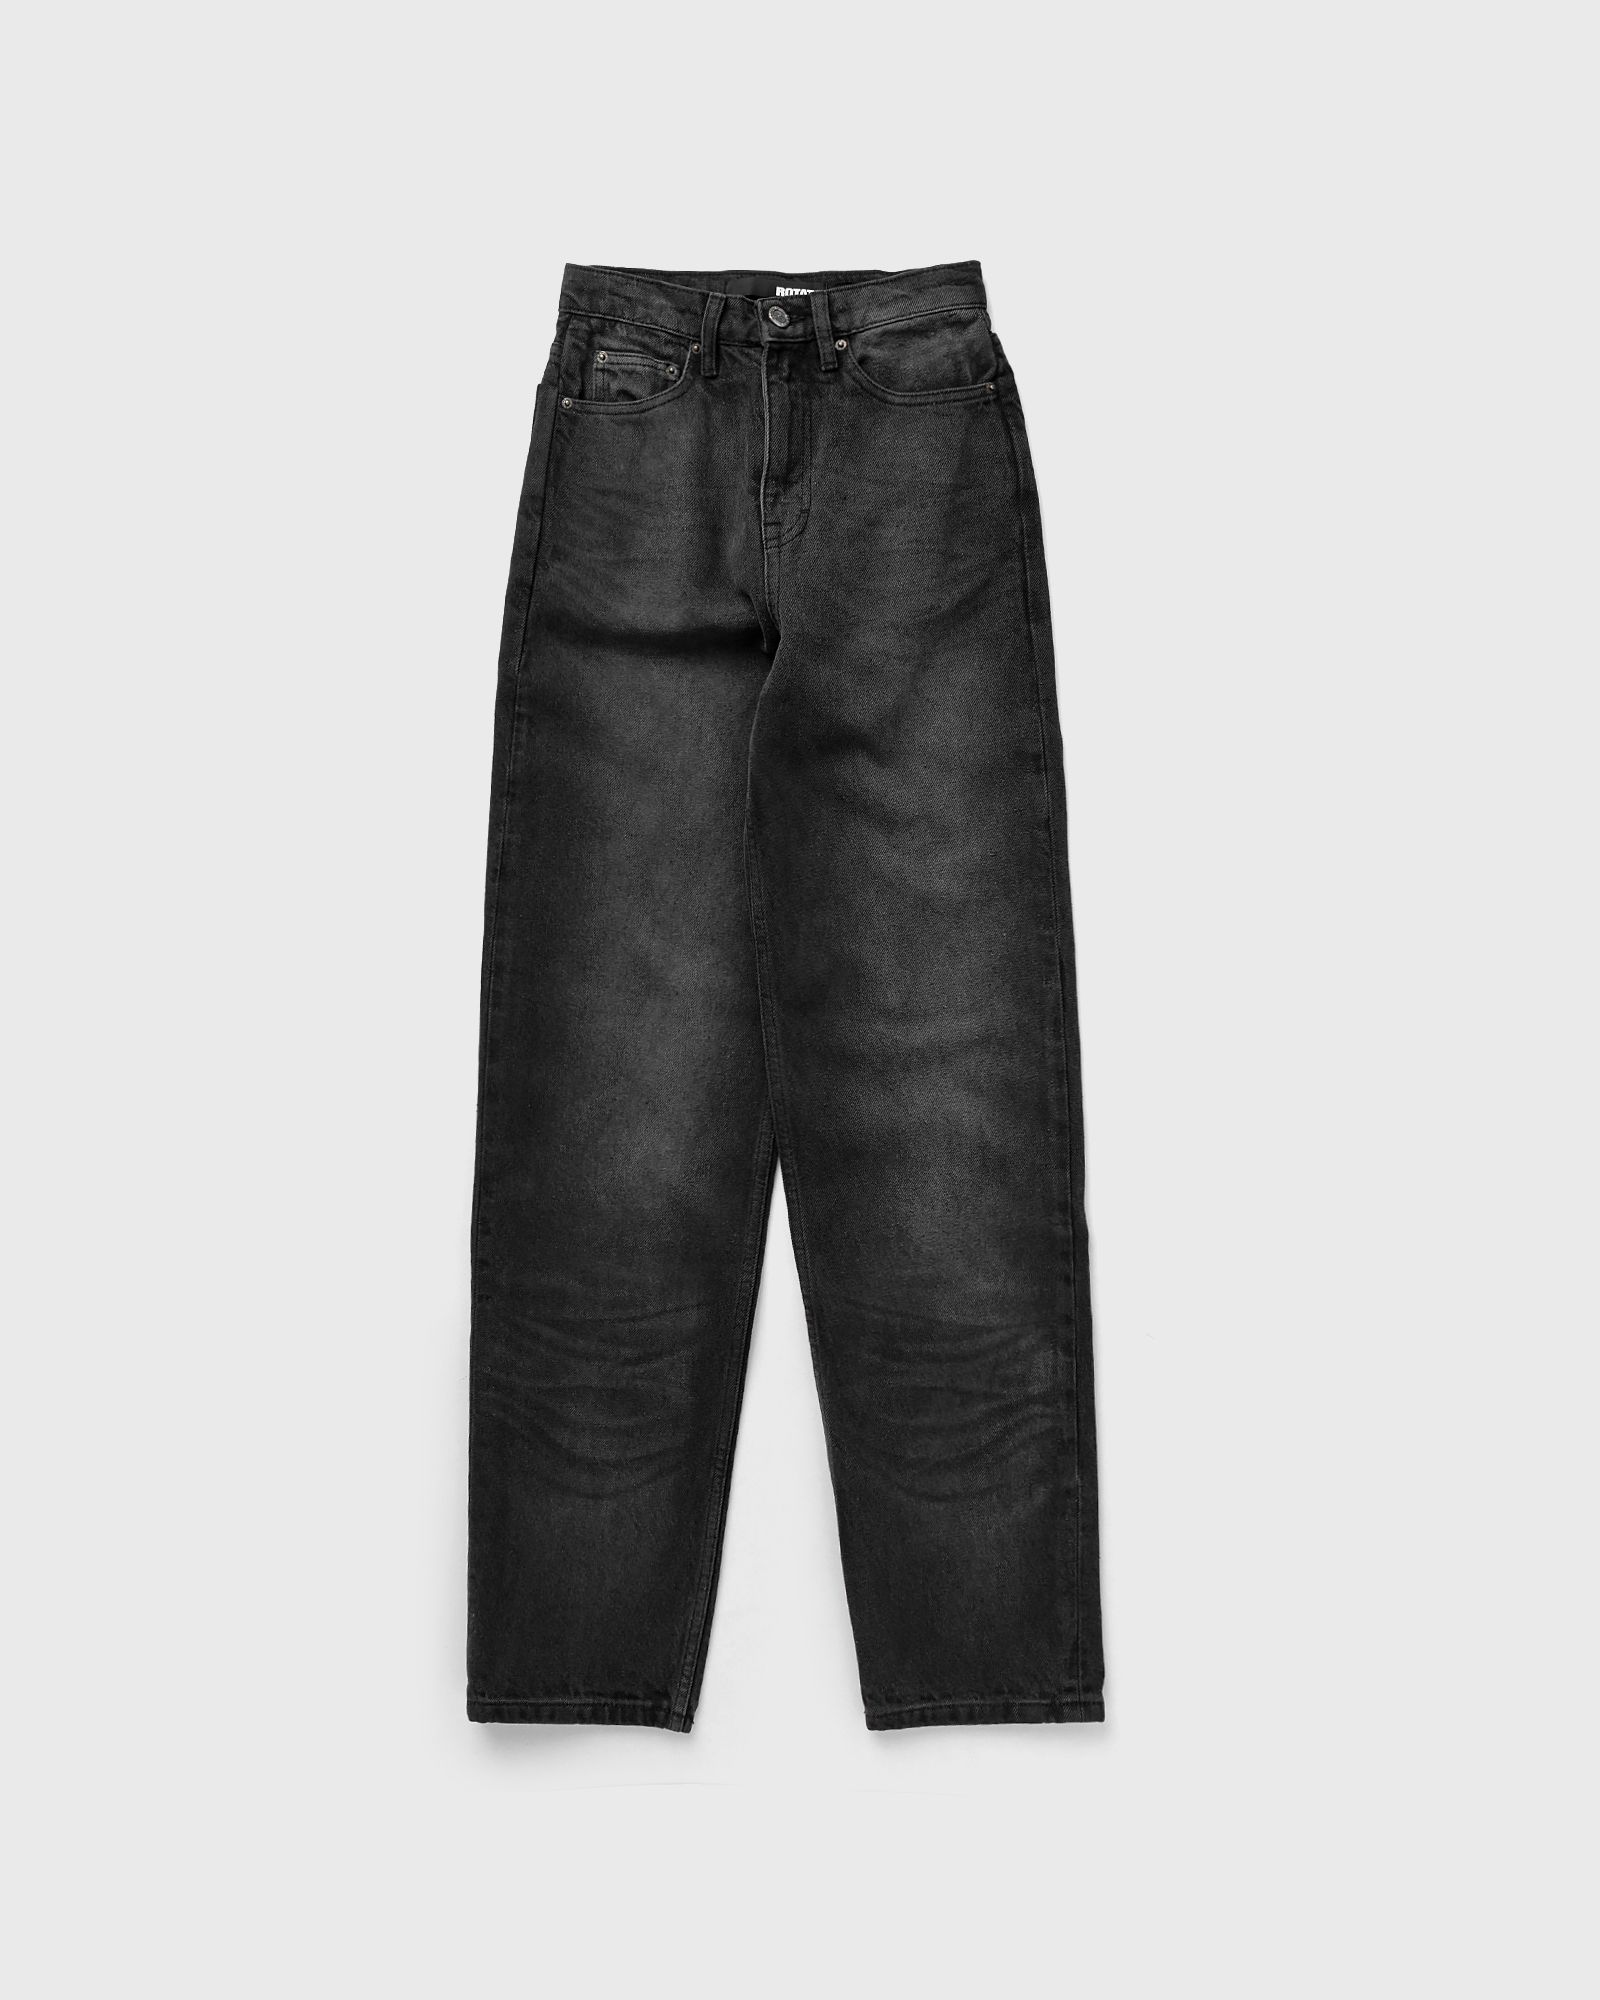 ROTATE Birger Christensen - twill high rise pants women jeans black in größe:m